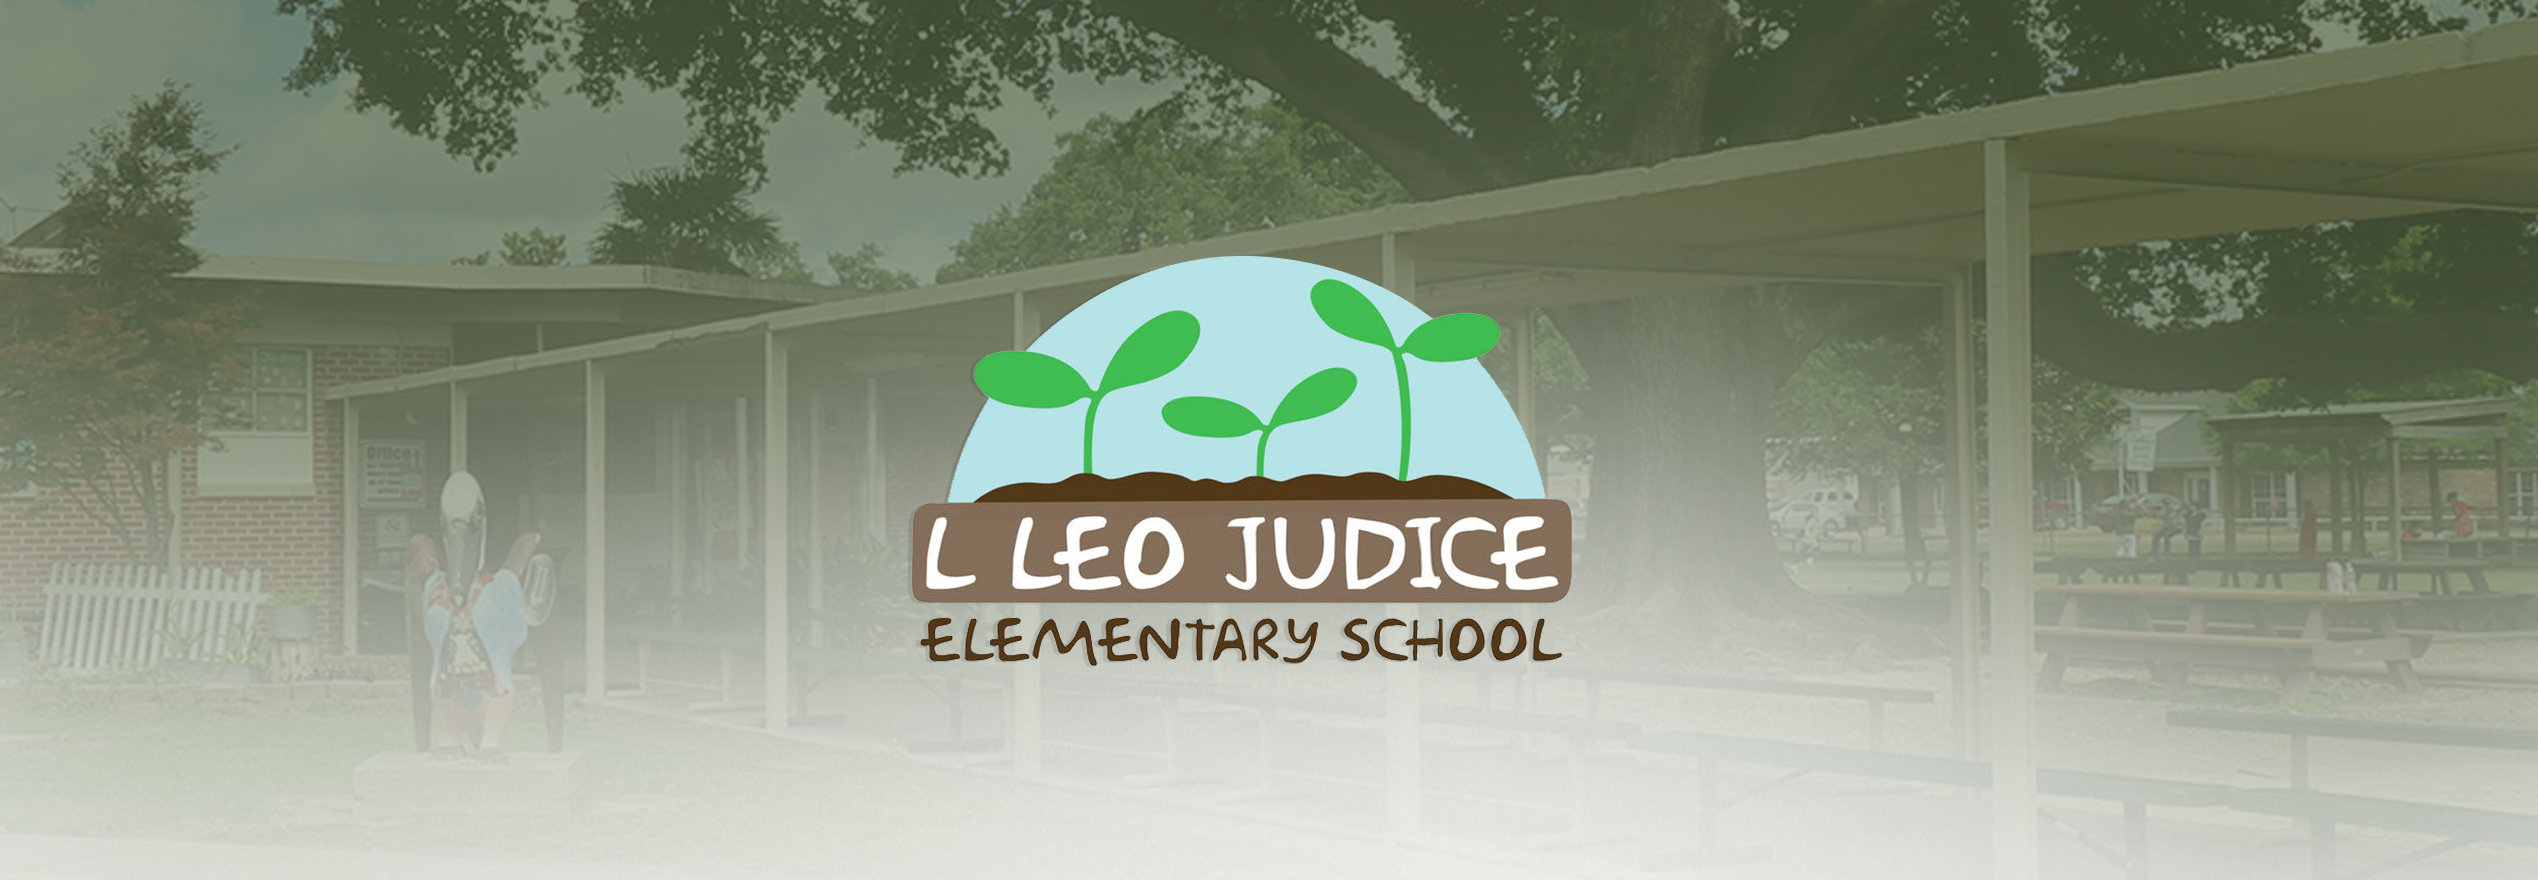 L. Leo Judice School Building